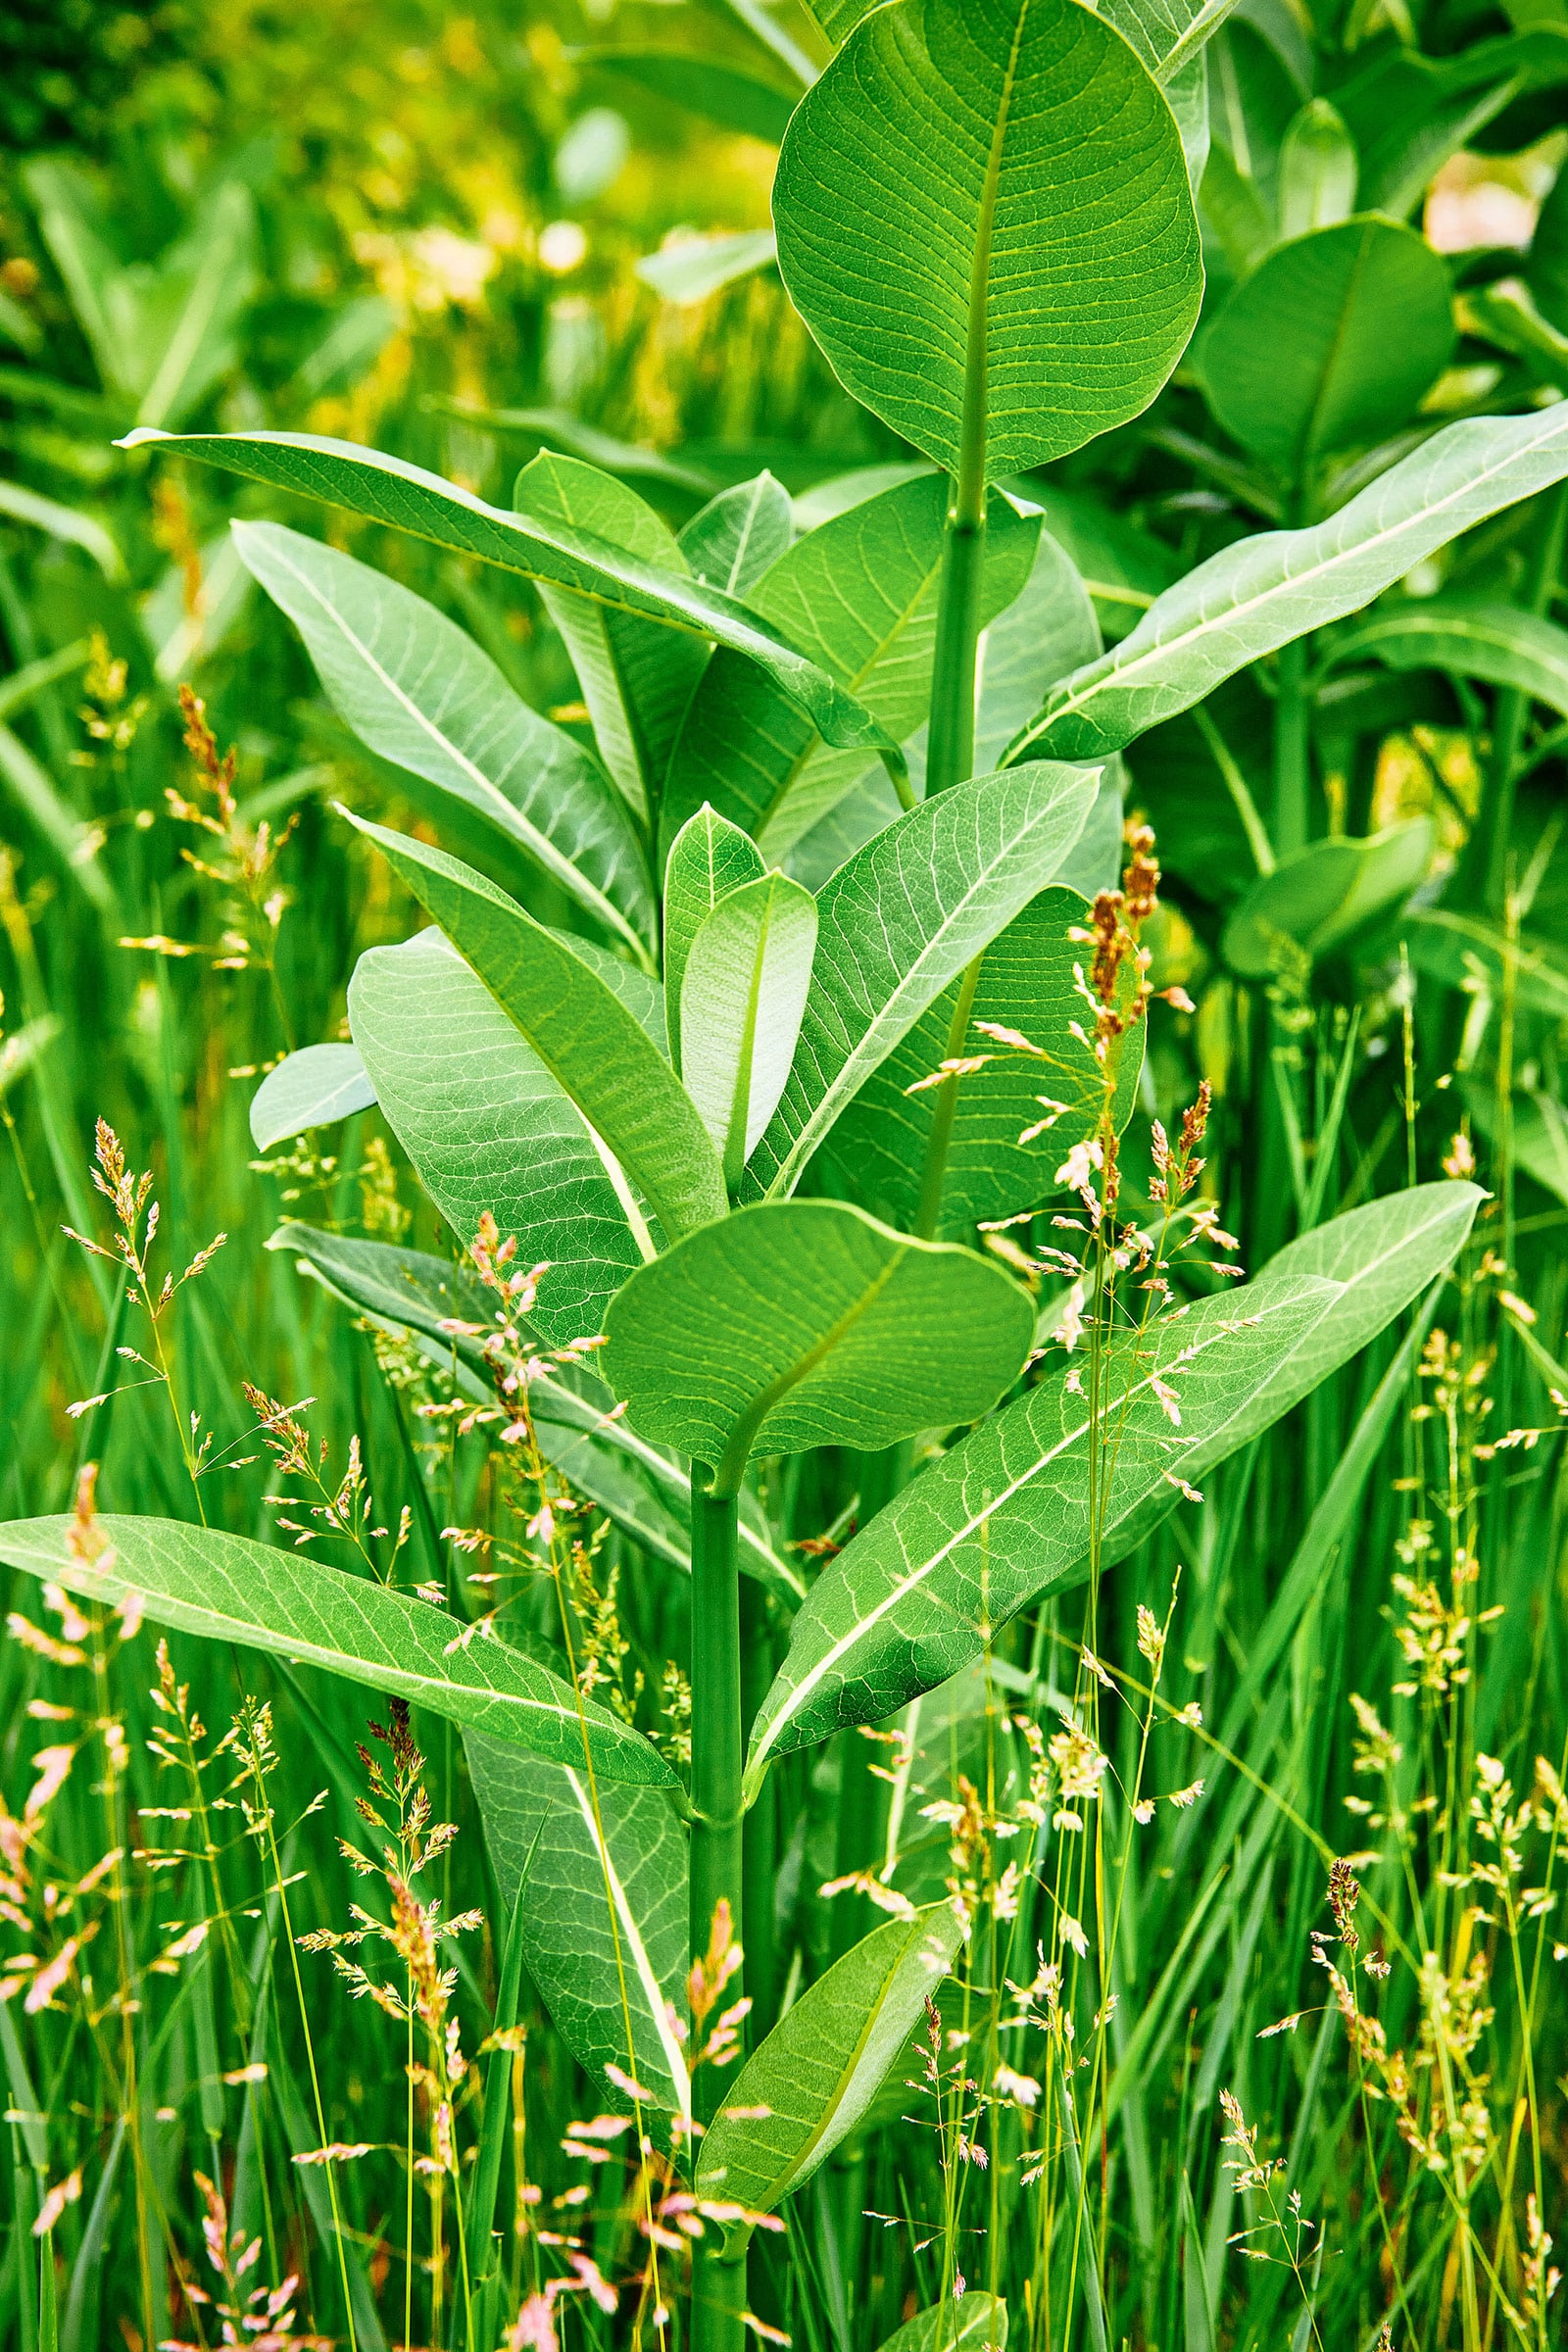 Milkweed plant growing in a field